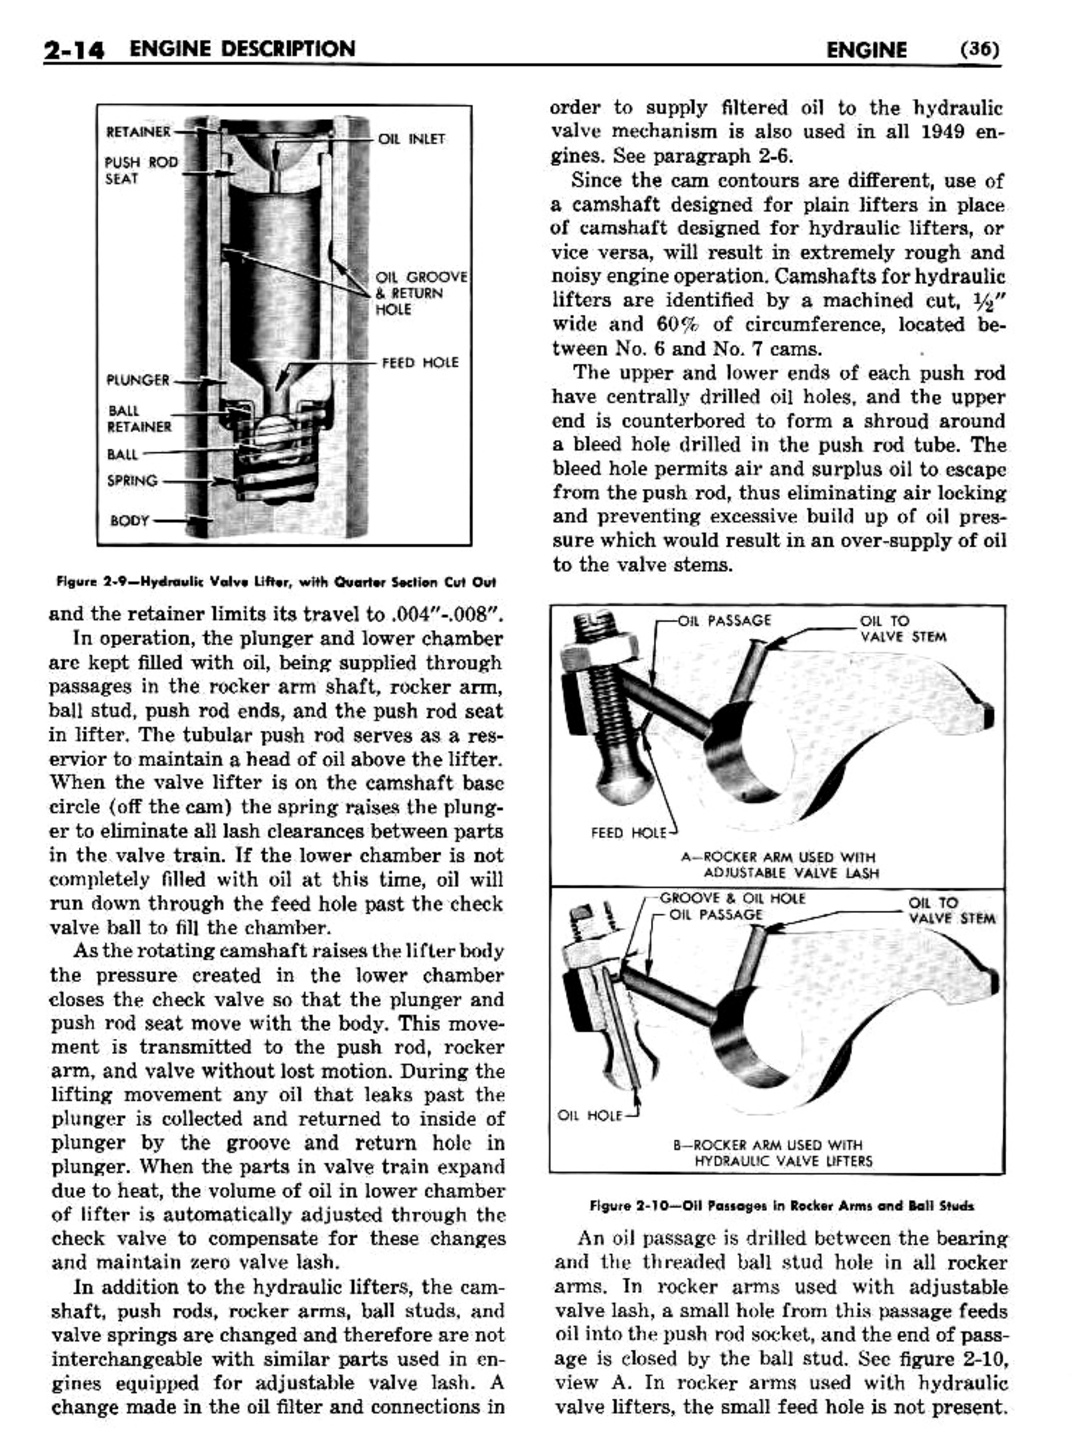 n_03 1948 Buick Shop Manual - Engine-014-014.jpg